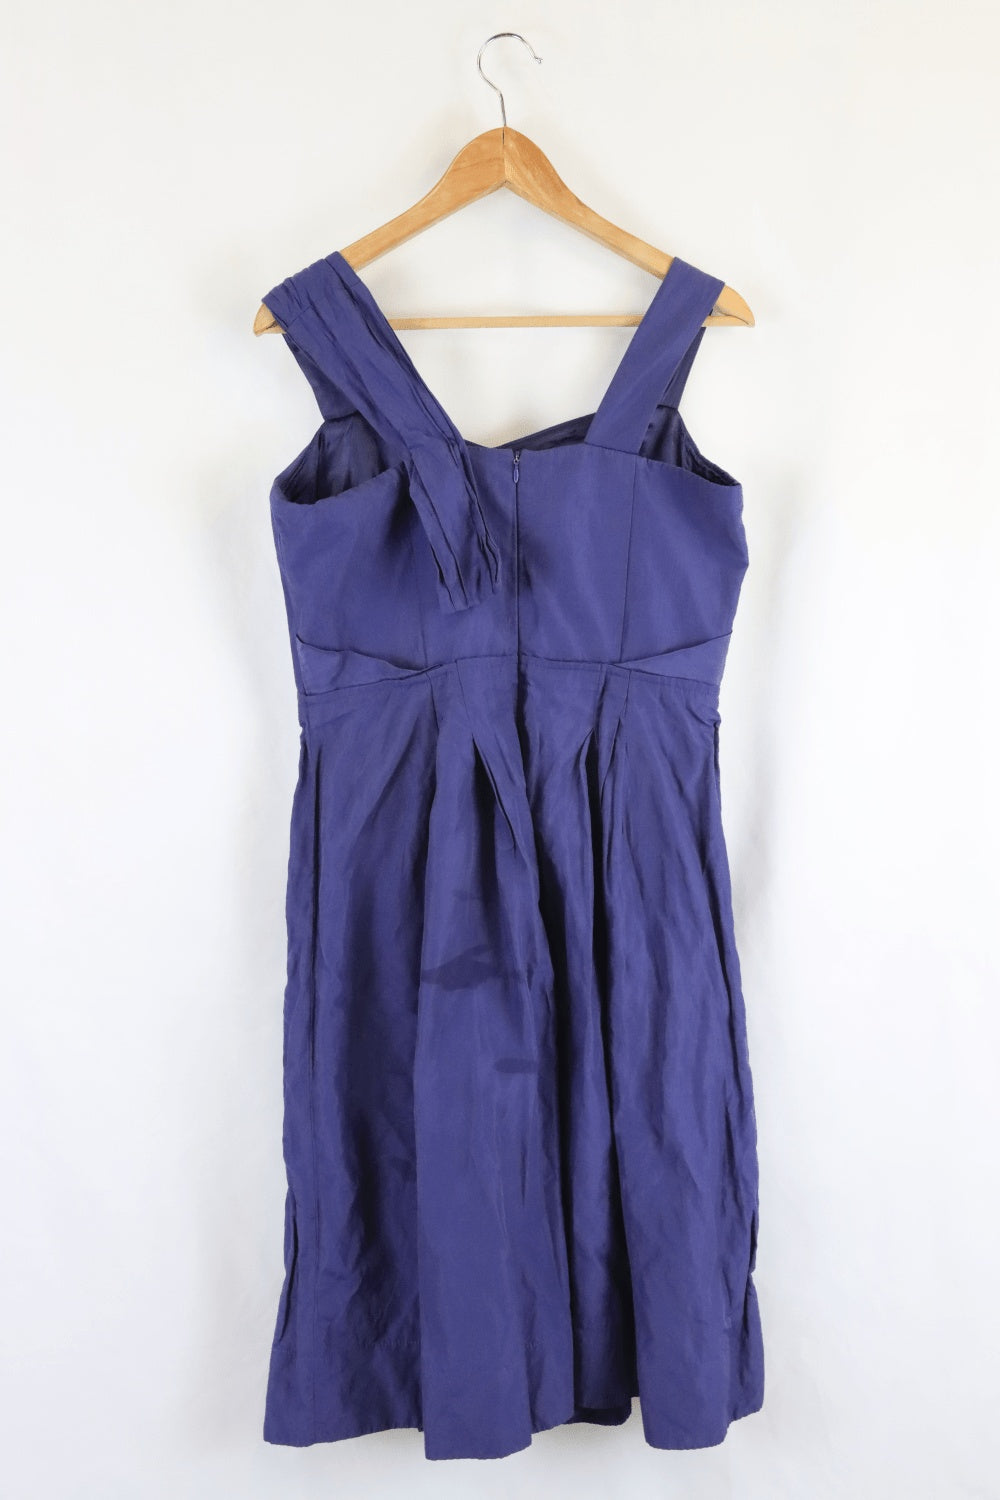 Veronika Maine Purple Dress 12